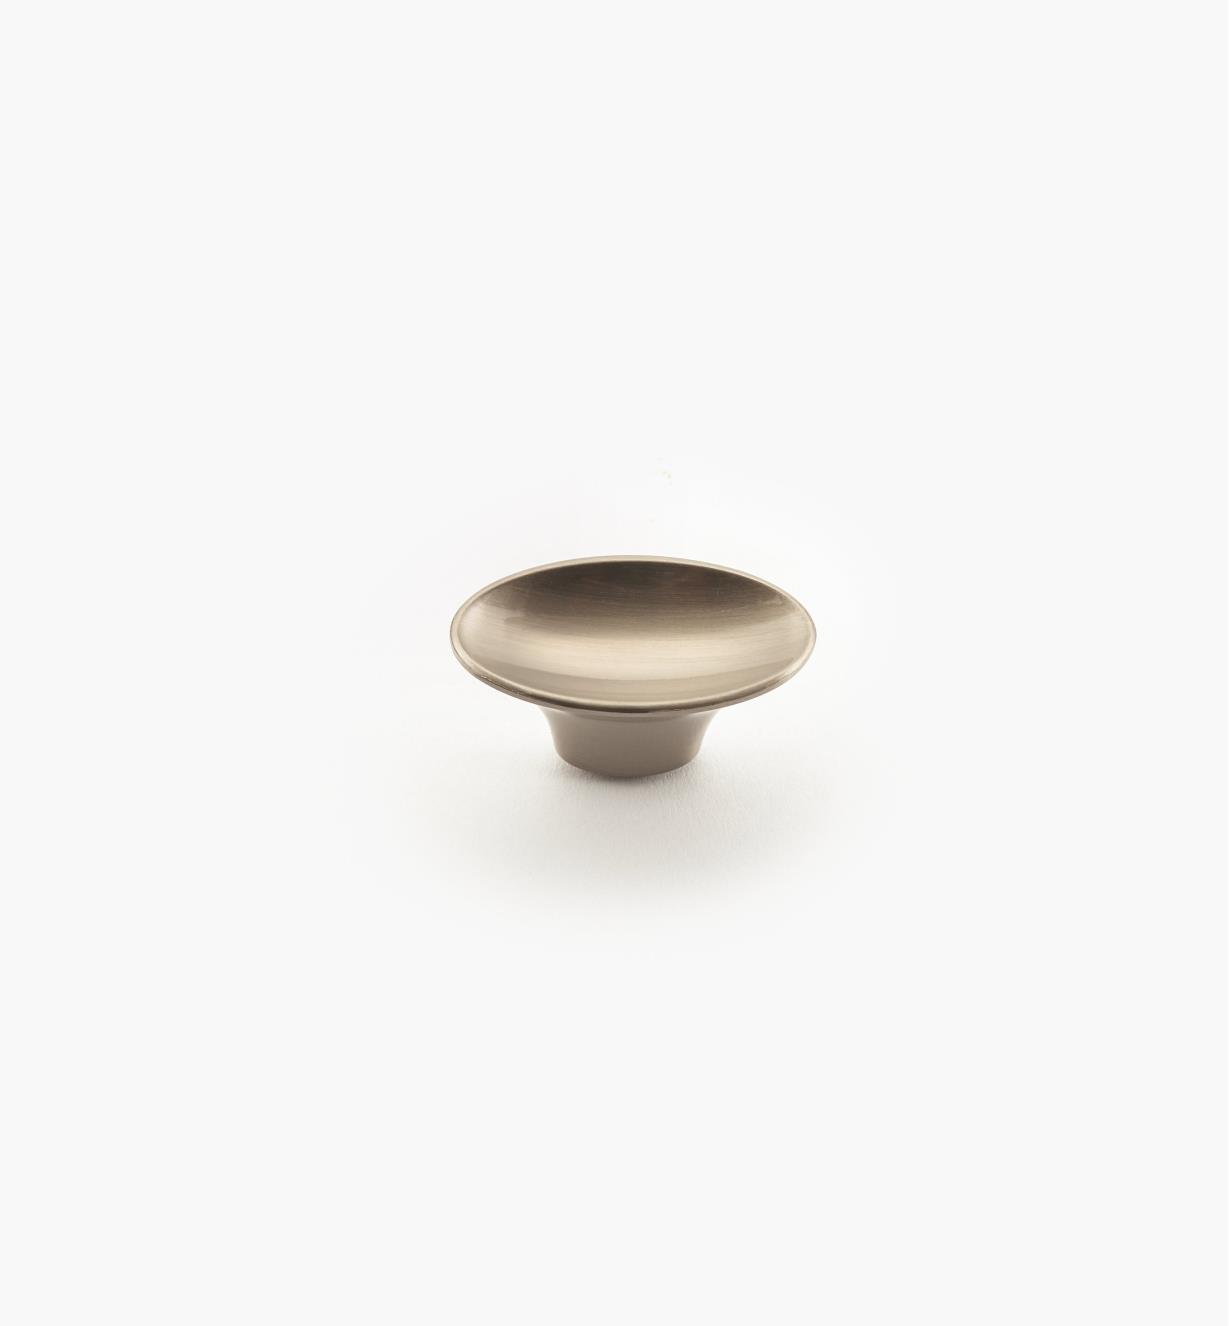 02A3813 - Bouton ovale de 2 po, série Sleek, chrome satiné